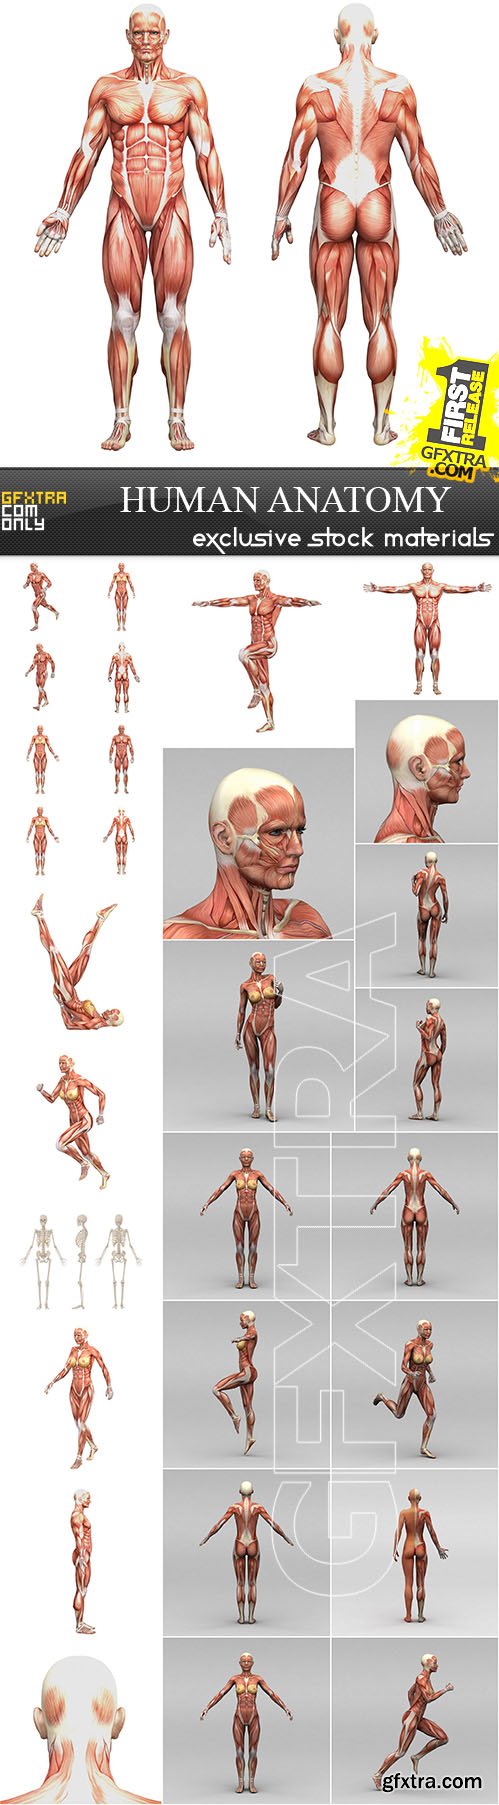 Human Anatomy 30xJPG